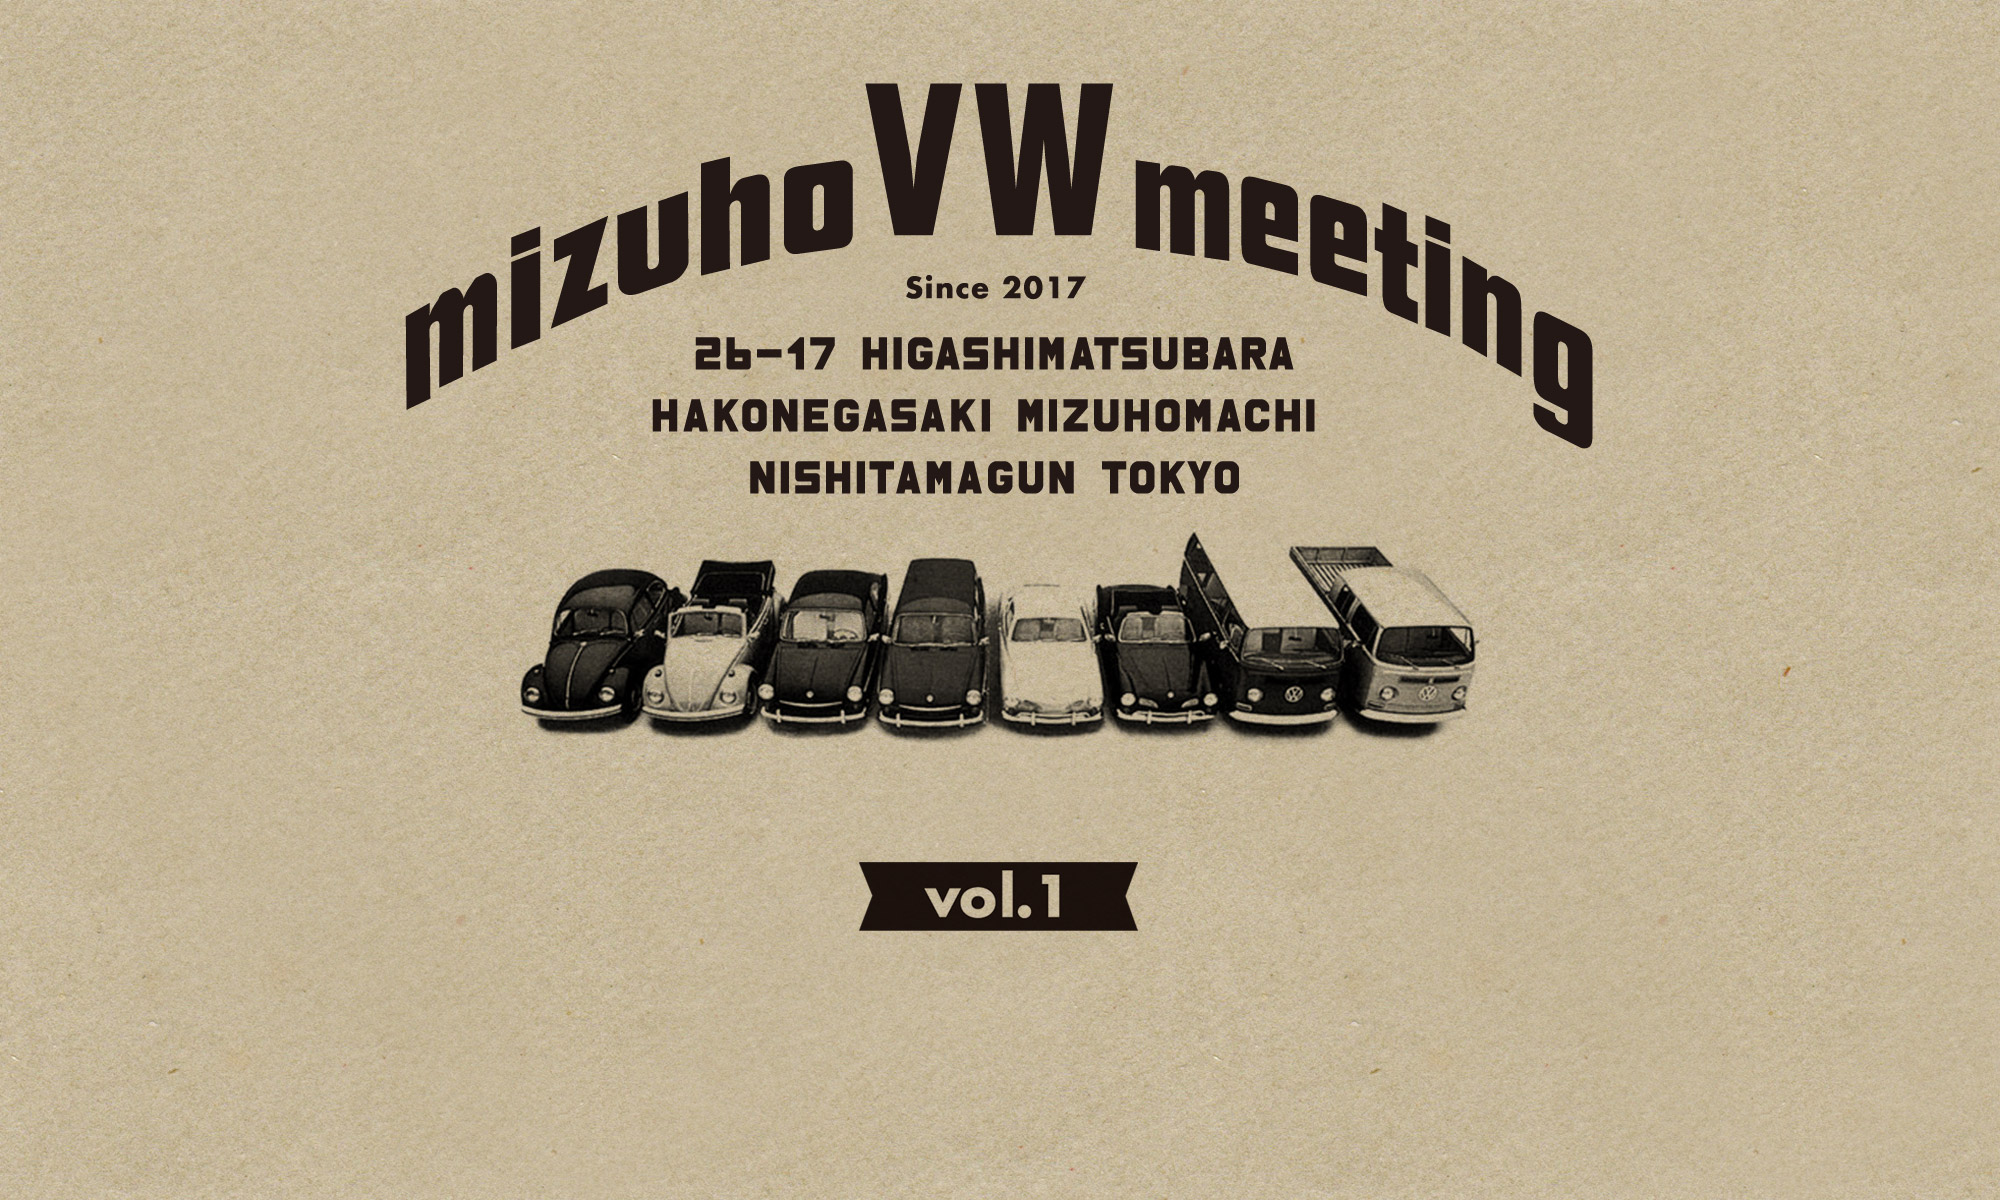 mizuho VW meeting Vol.1